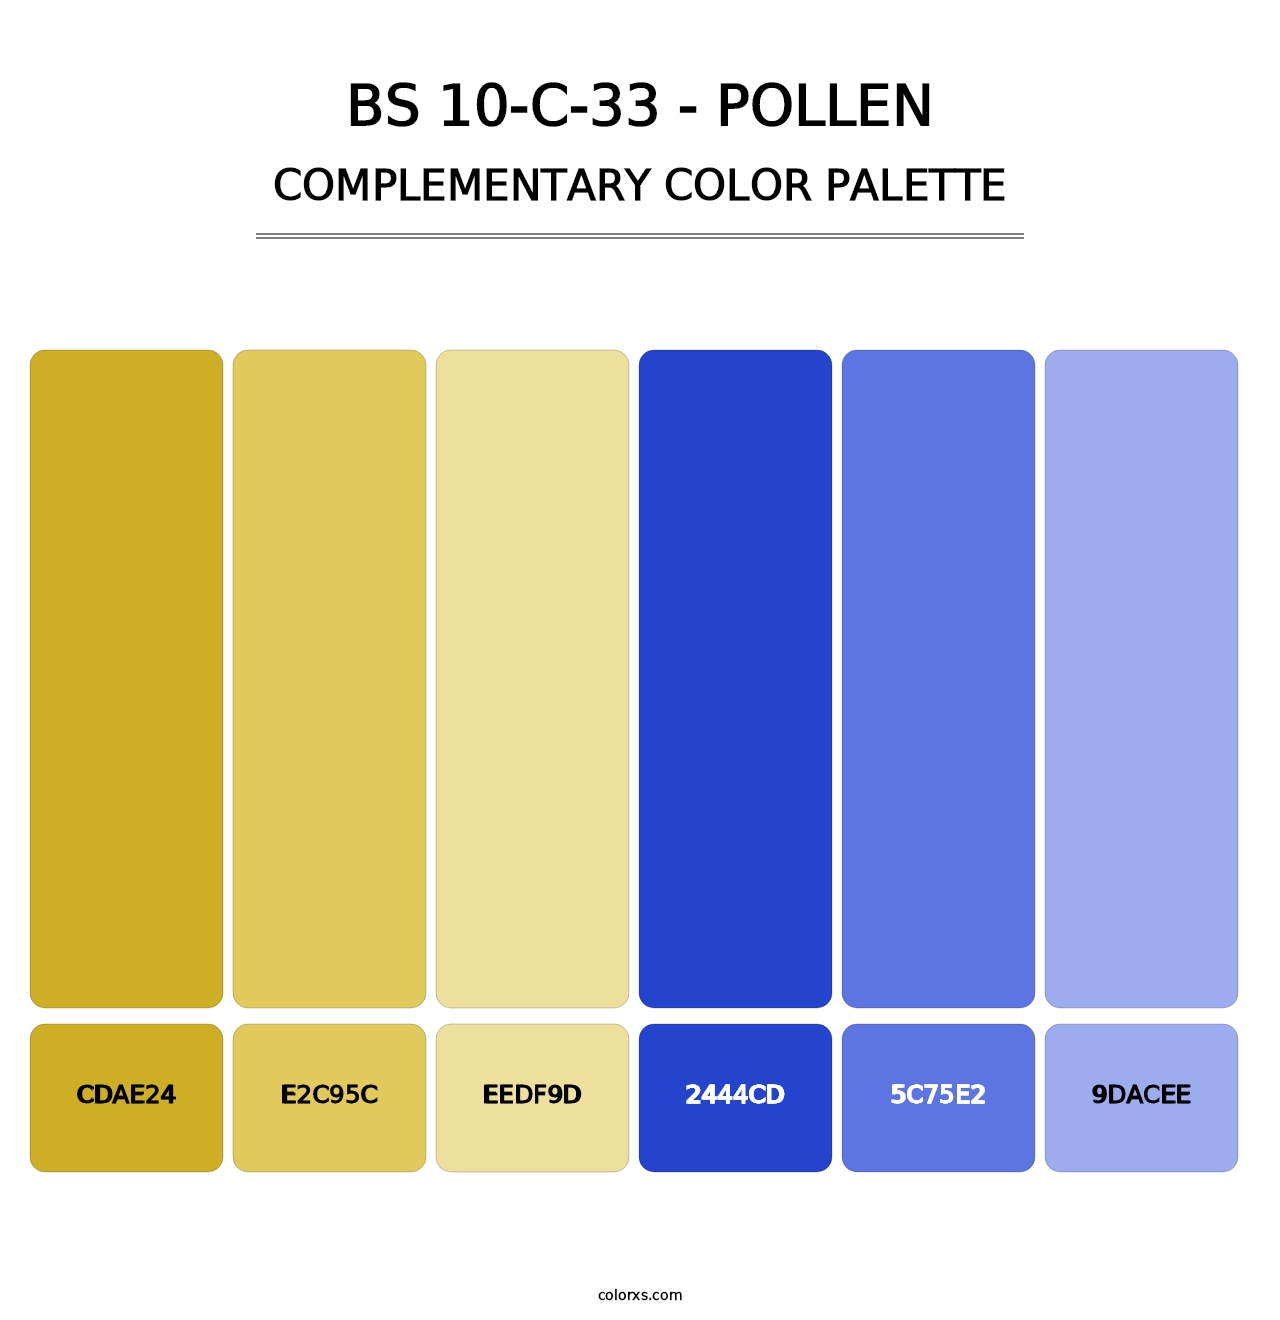 BS 10-C-33 - Pollen - Complementary Color Palette